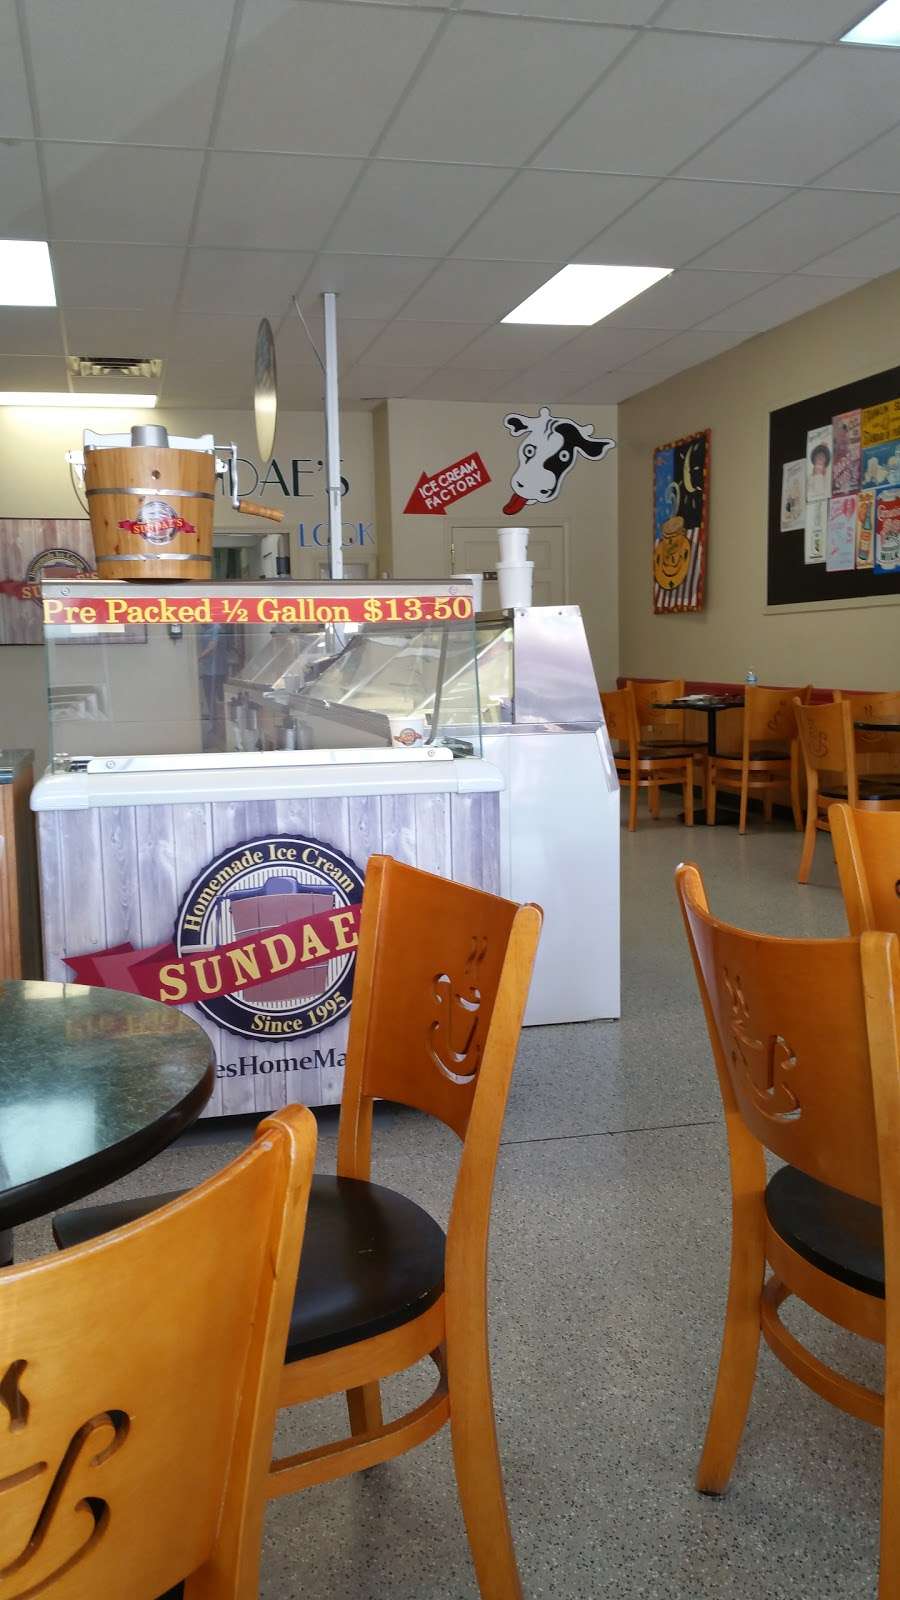 Sundaes Homemade Ice Cream | 9922 E 79th St, Indianapolis, IN 46256 | Phone: (317) 570-0533